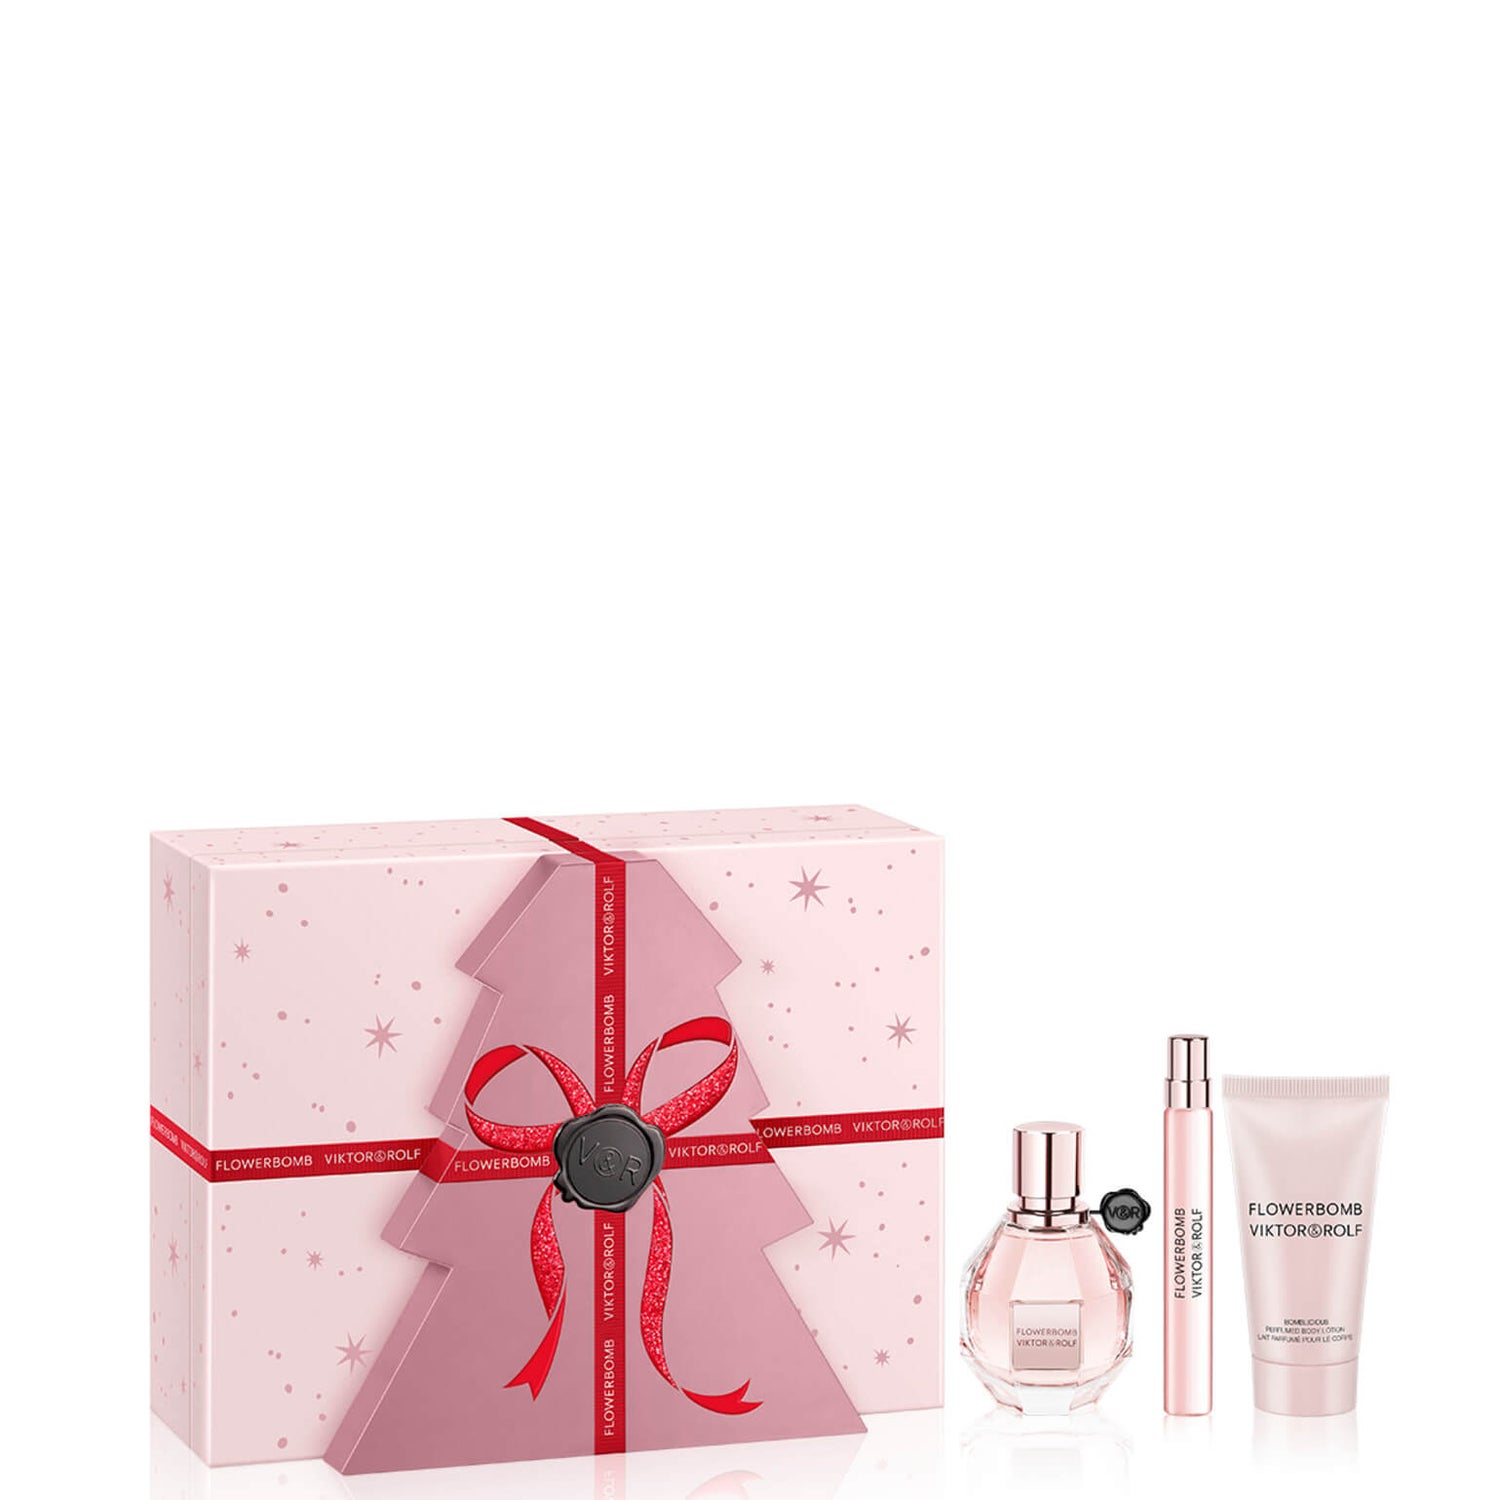 Viktor and Rolf Flowerbomb Eau de Parfum Luxury Gift Set 50ml (v hodnotě £115.00)